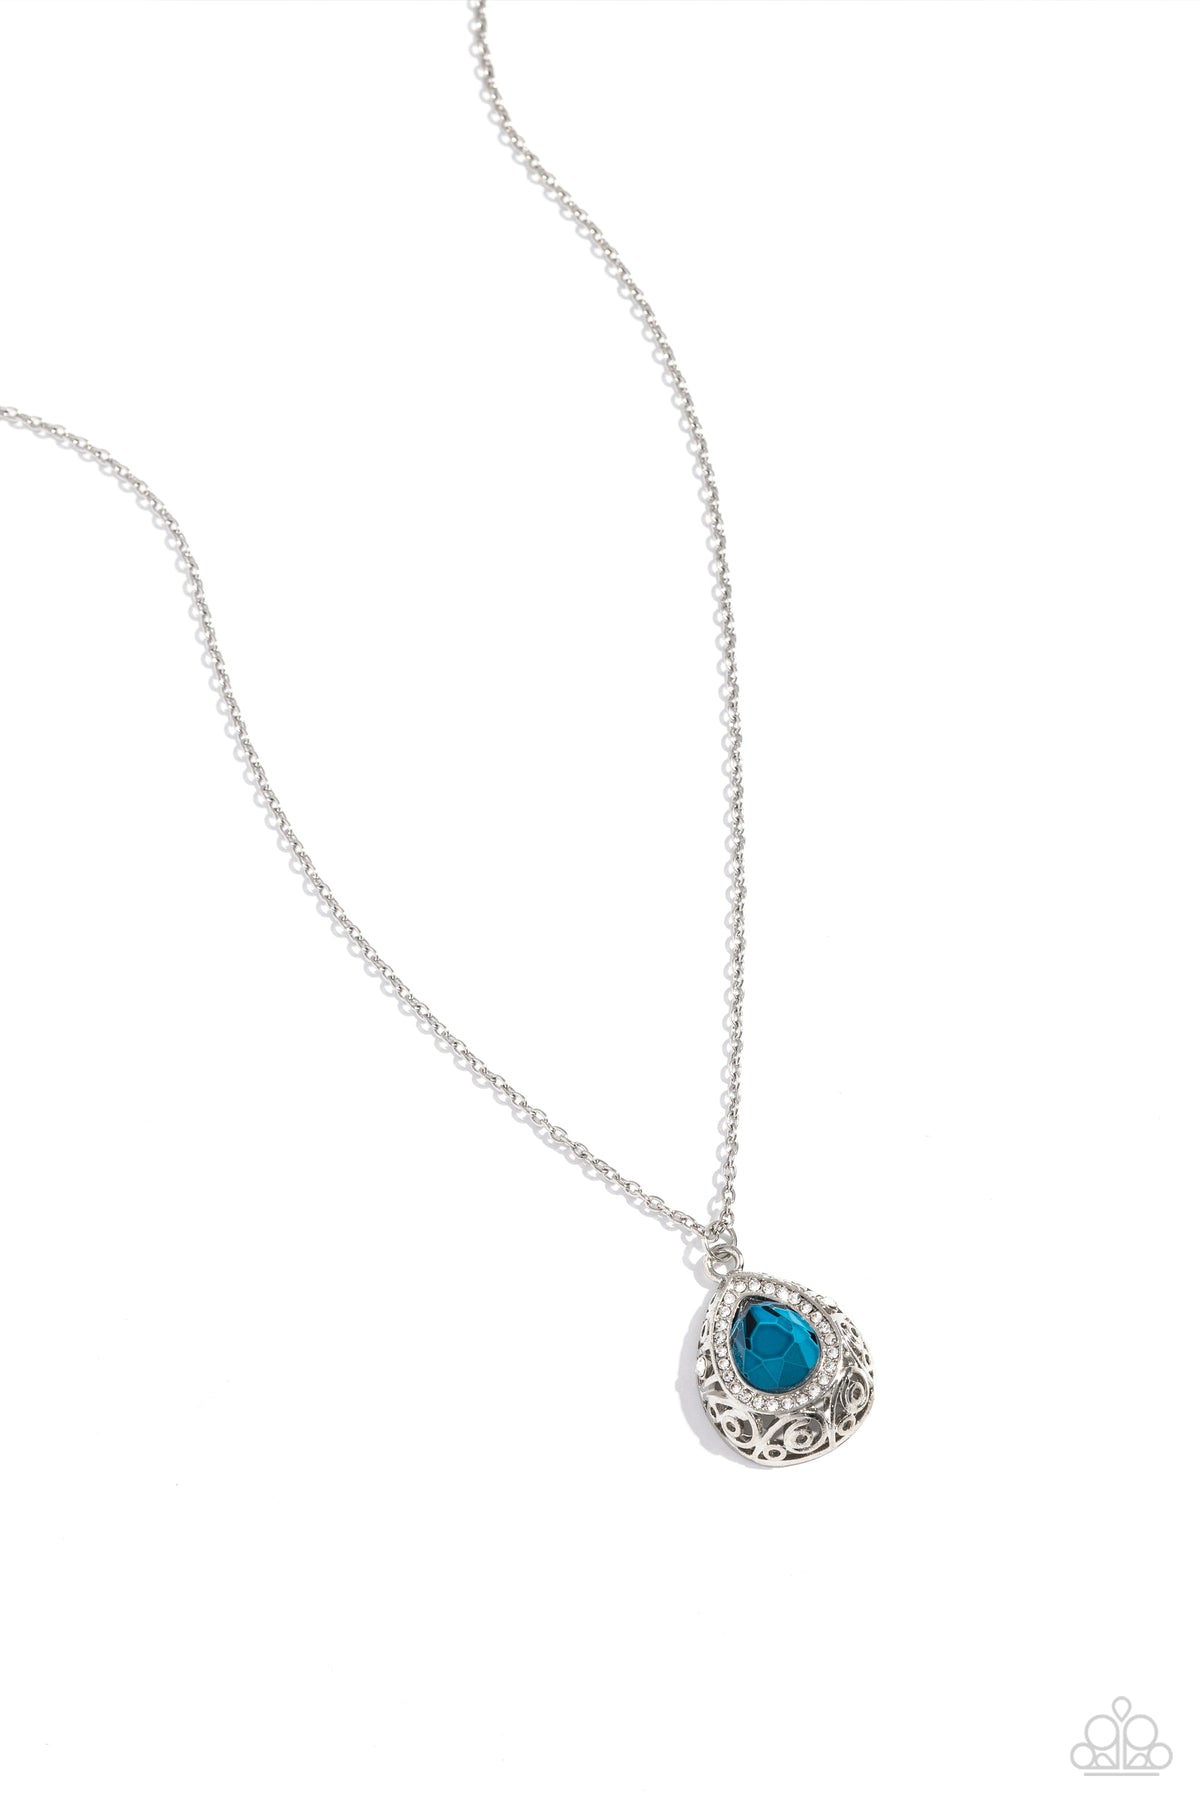 Gracefully Glamorous Blue Rhinestone Necklace - Paparazzi Accessories- lightbox - CarasShop.com - $5 Jewelry by Cara Jewels